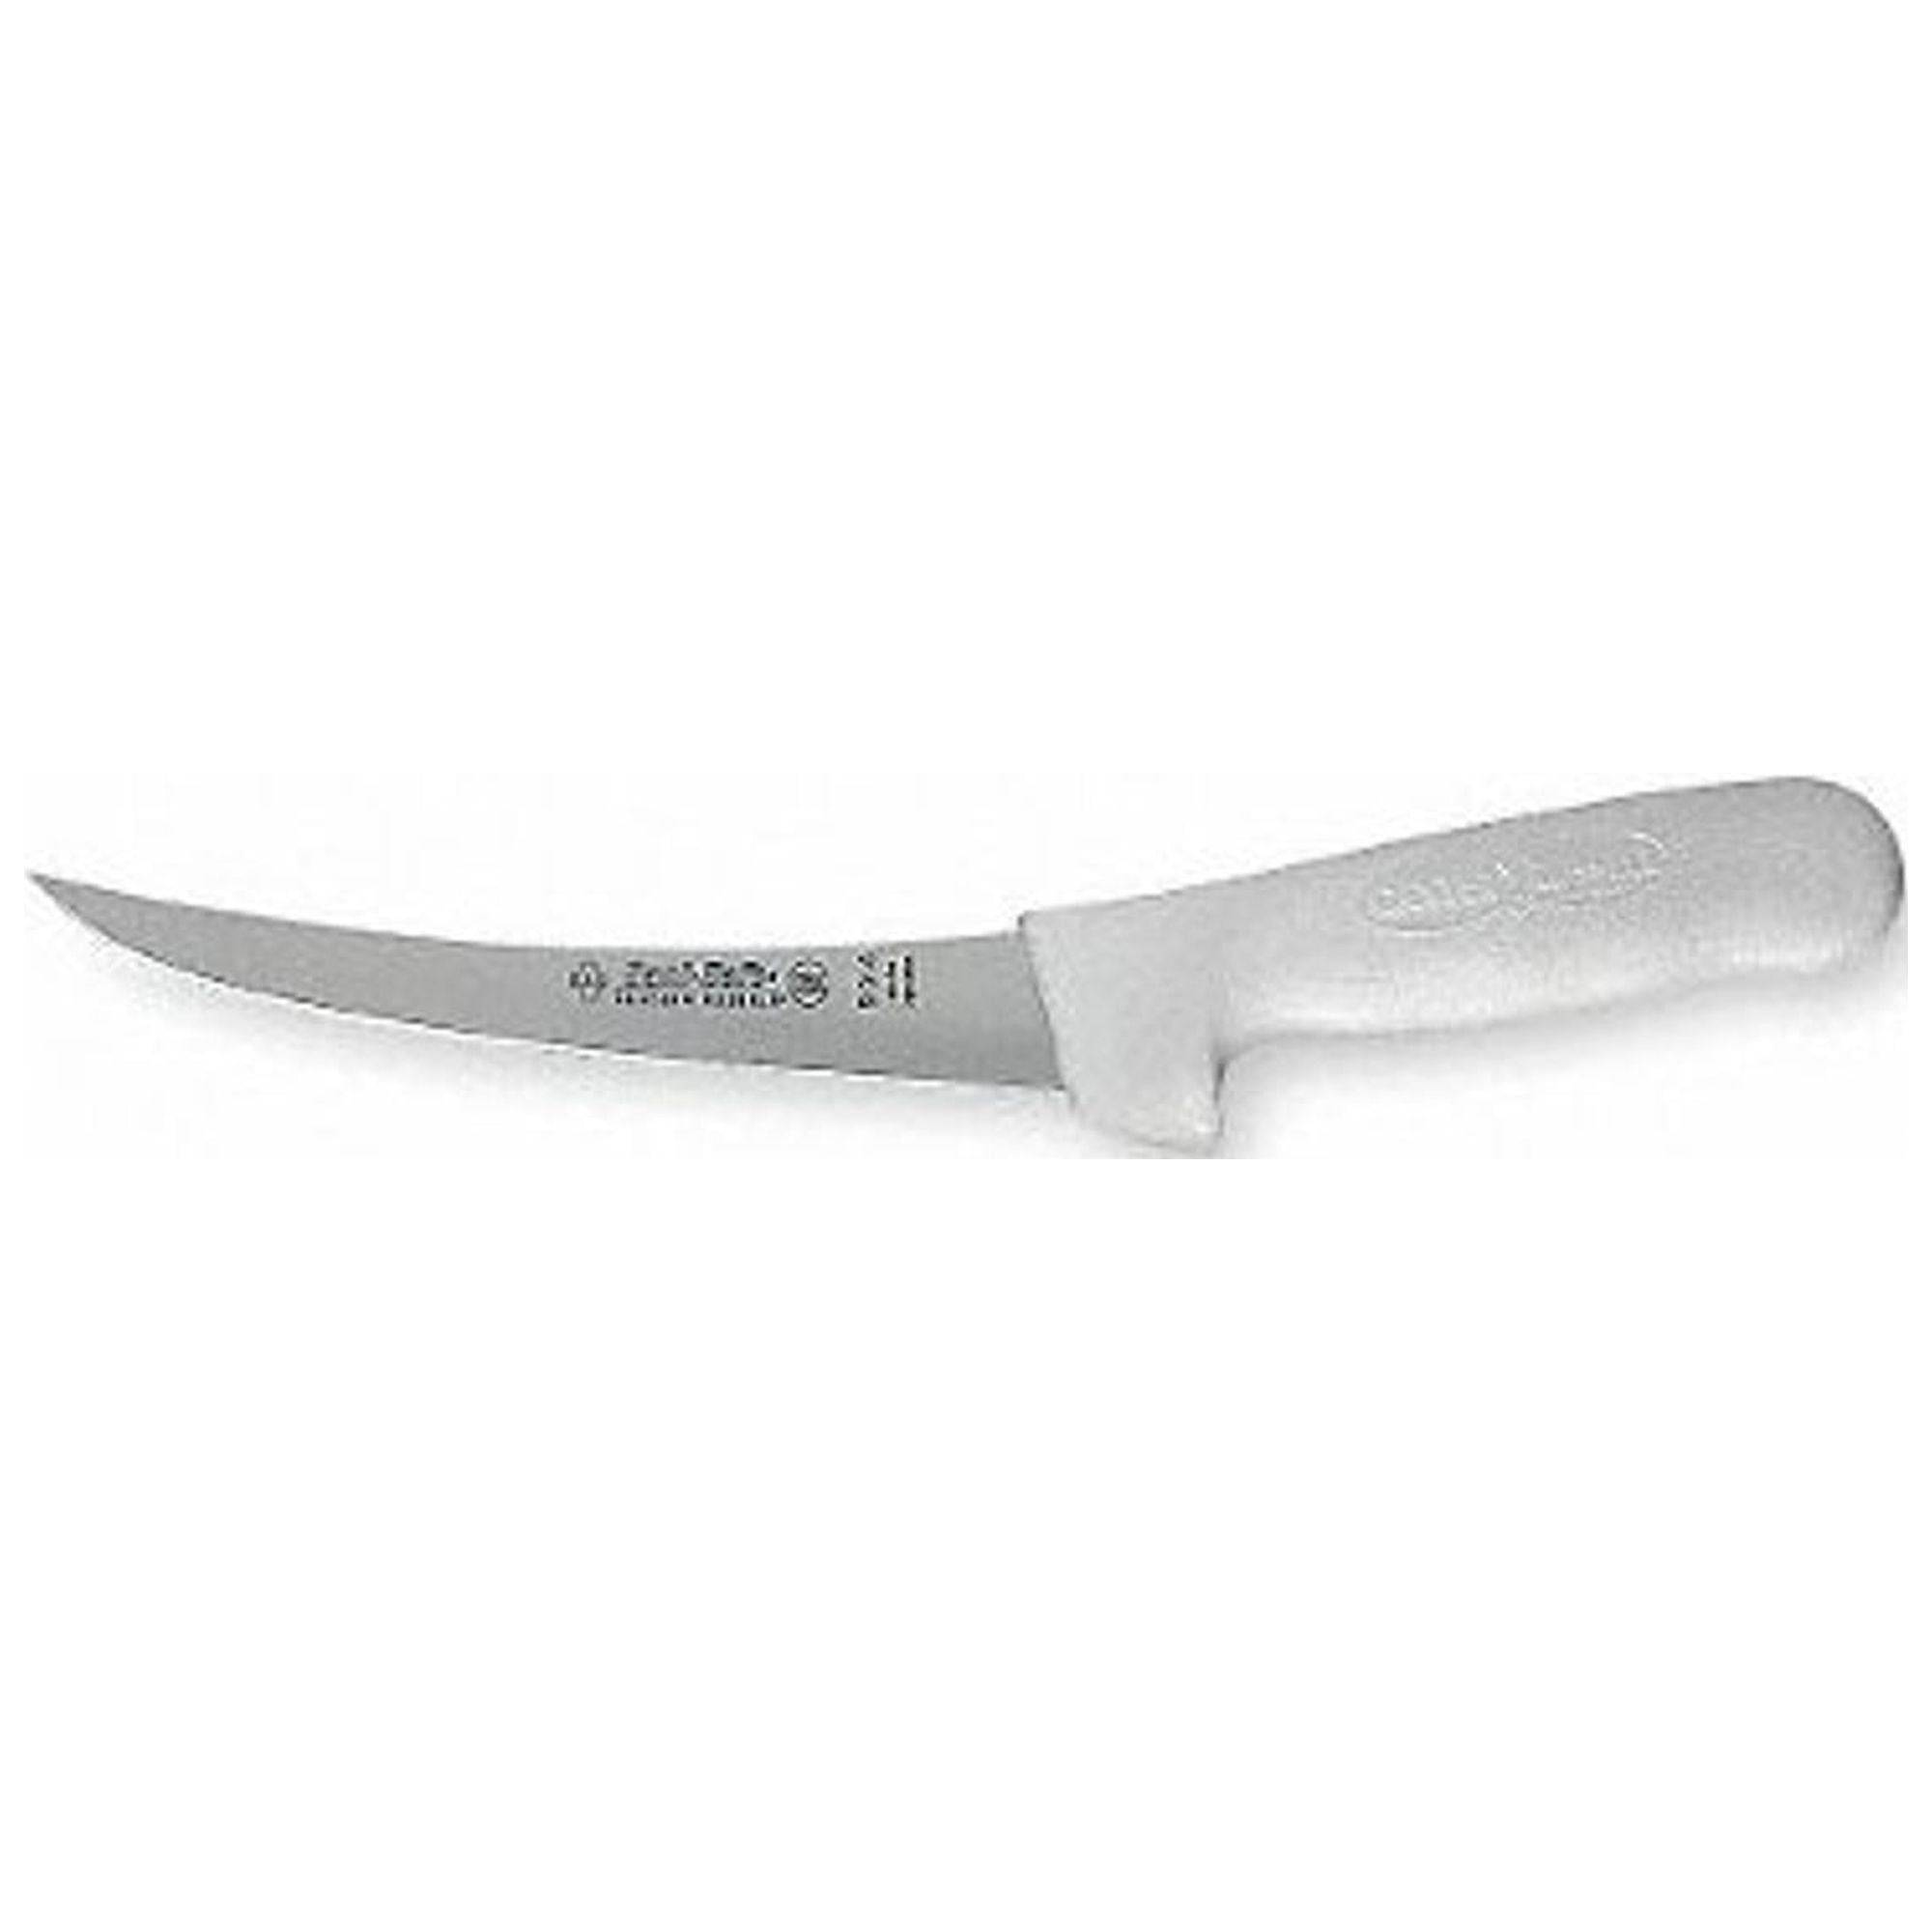 Dexter Econo Insulator Knife